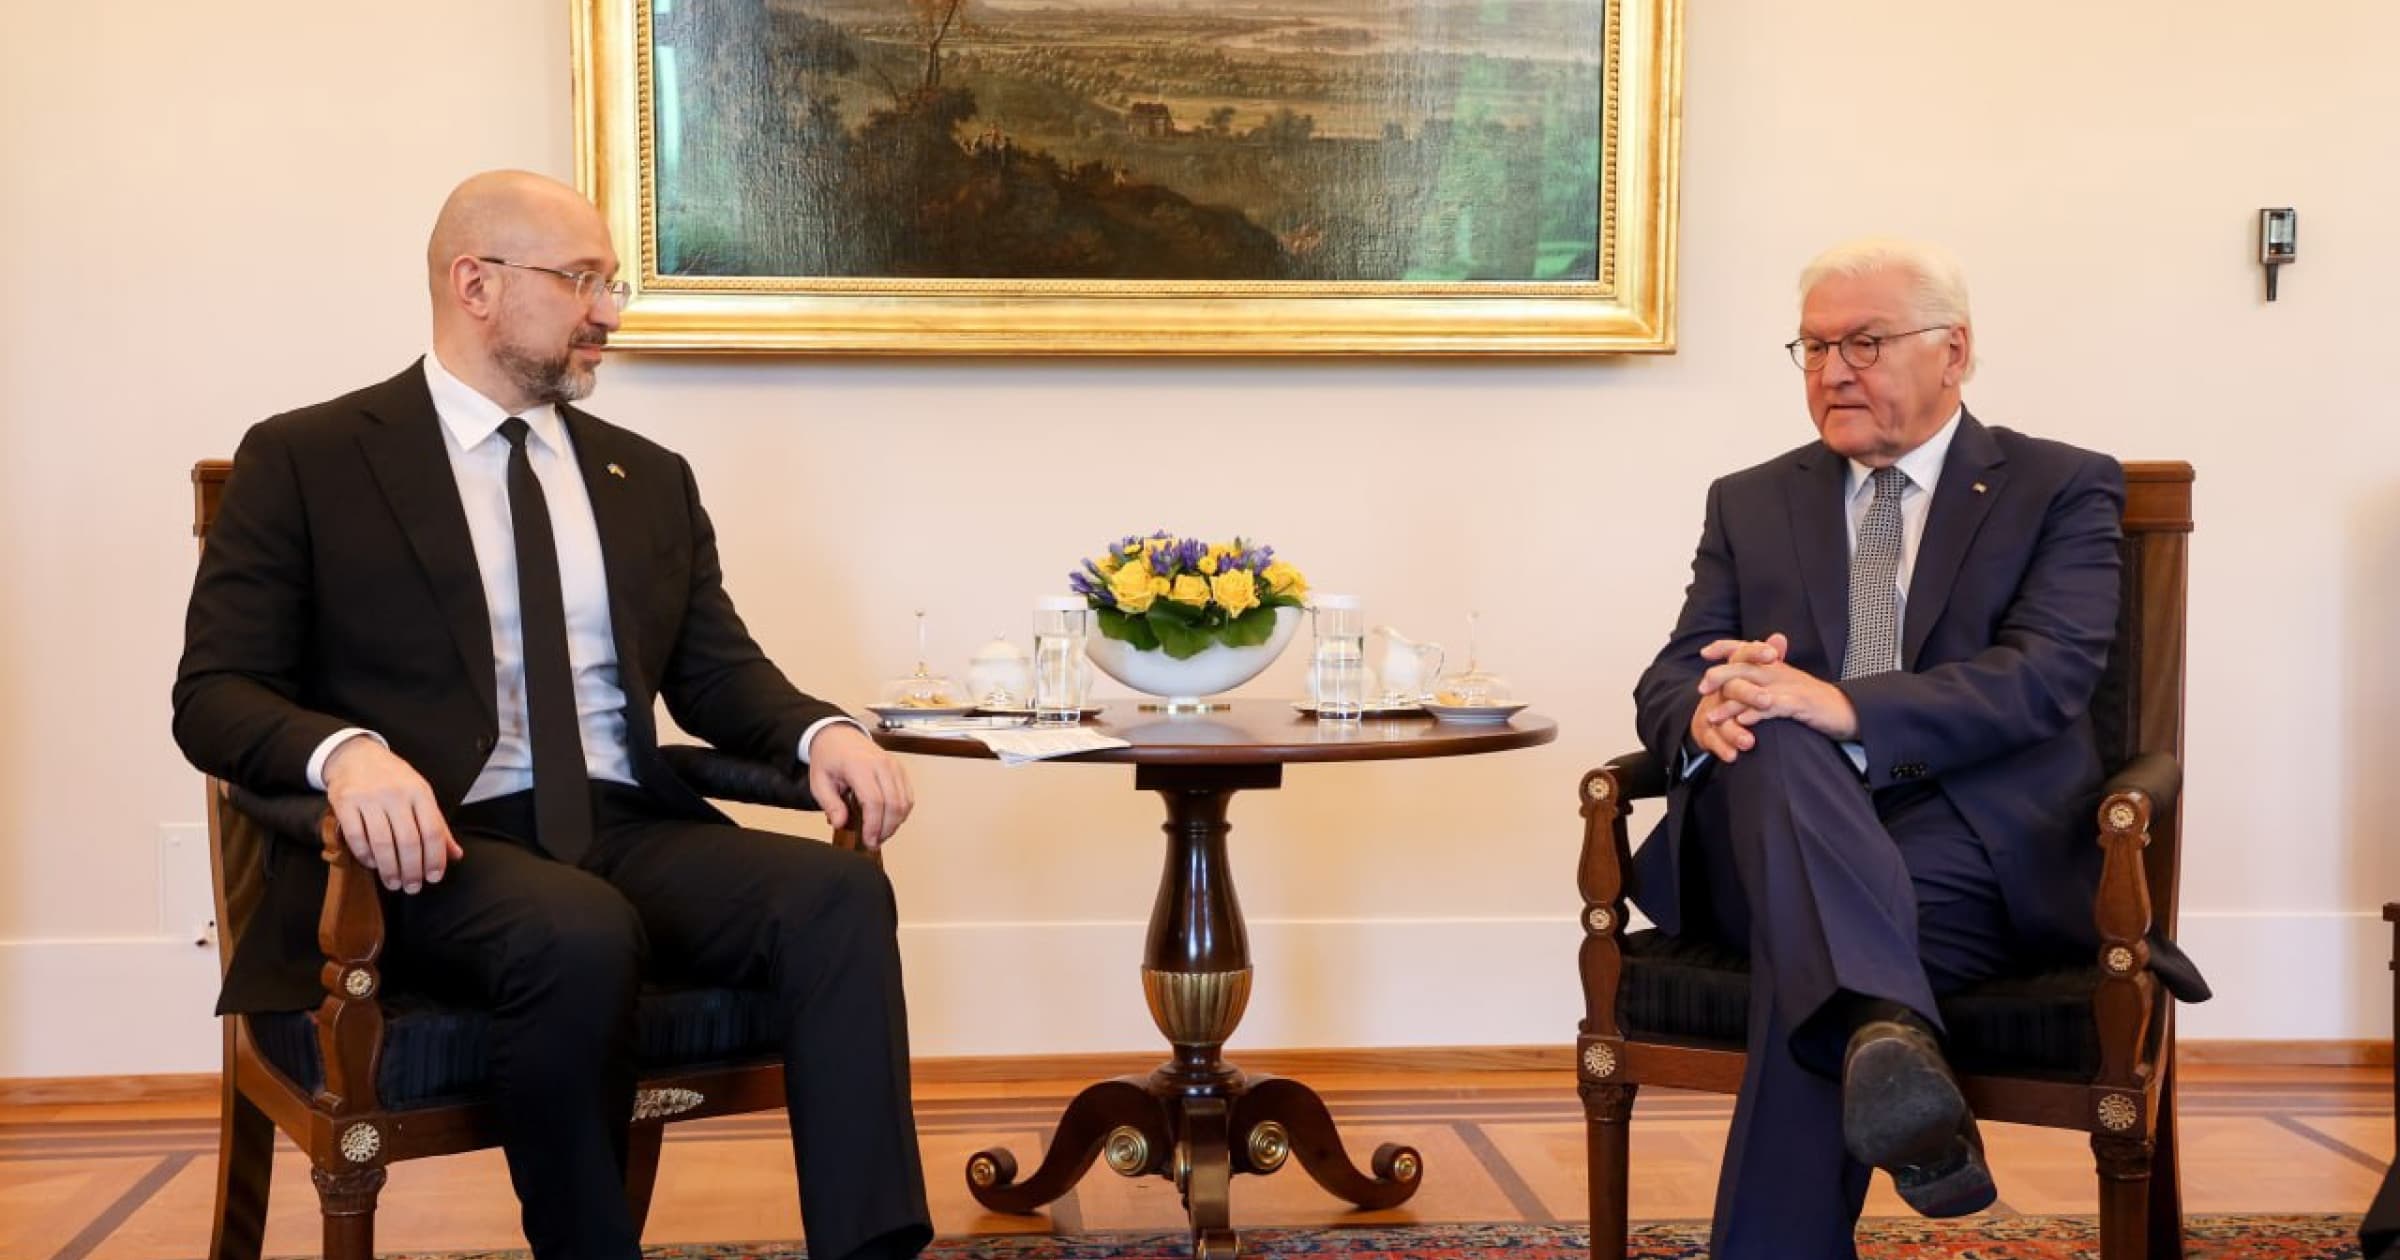 Prime Minister Denys Shmyhal met with Federal President Frank-Walter Steinmeier